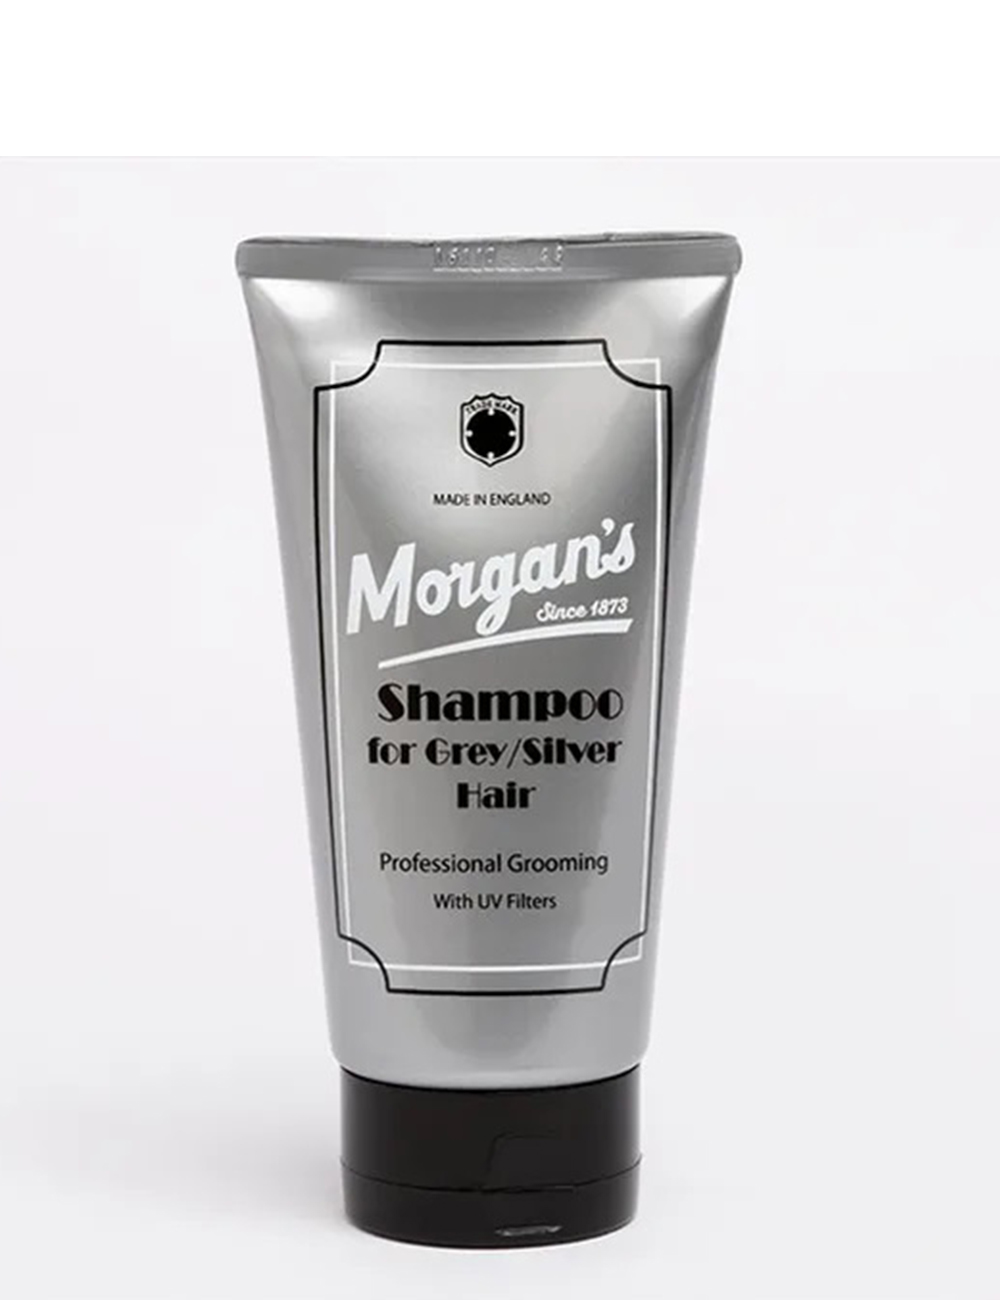 Morgans Pomade Shampoo for Grey Silver Hair 150ml Tube